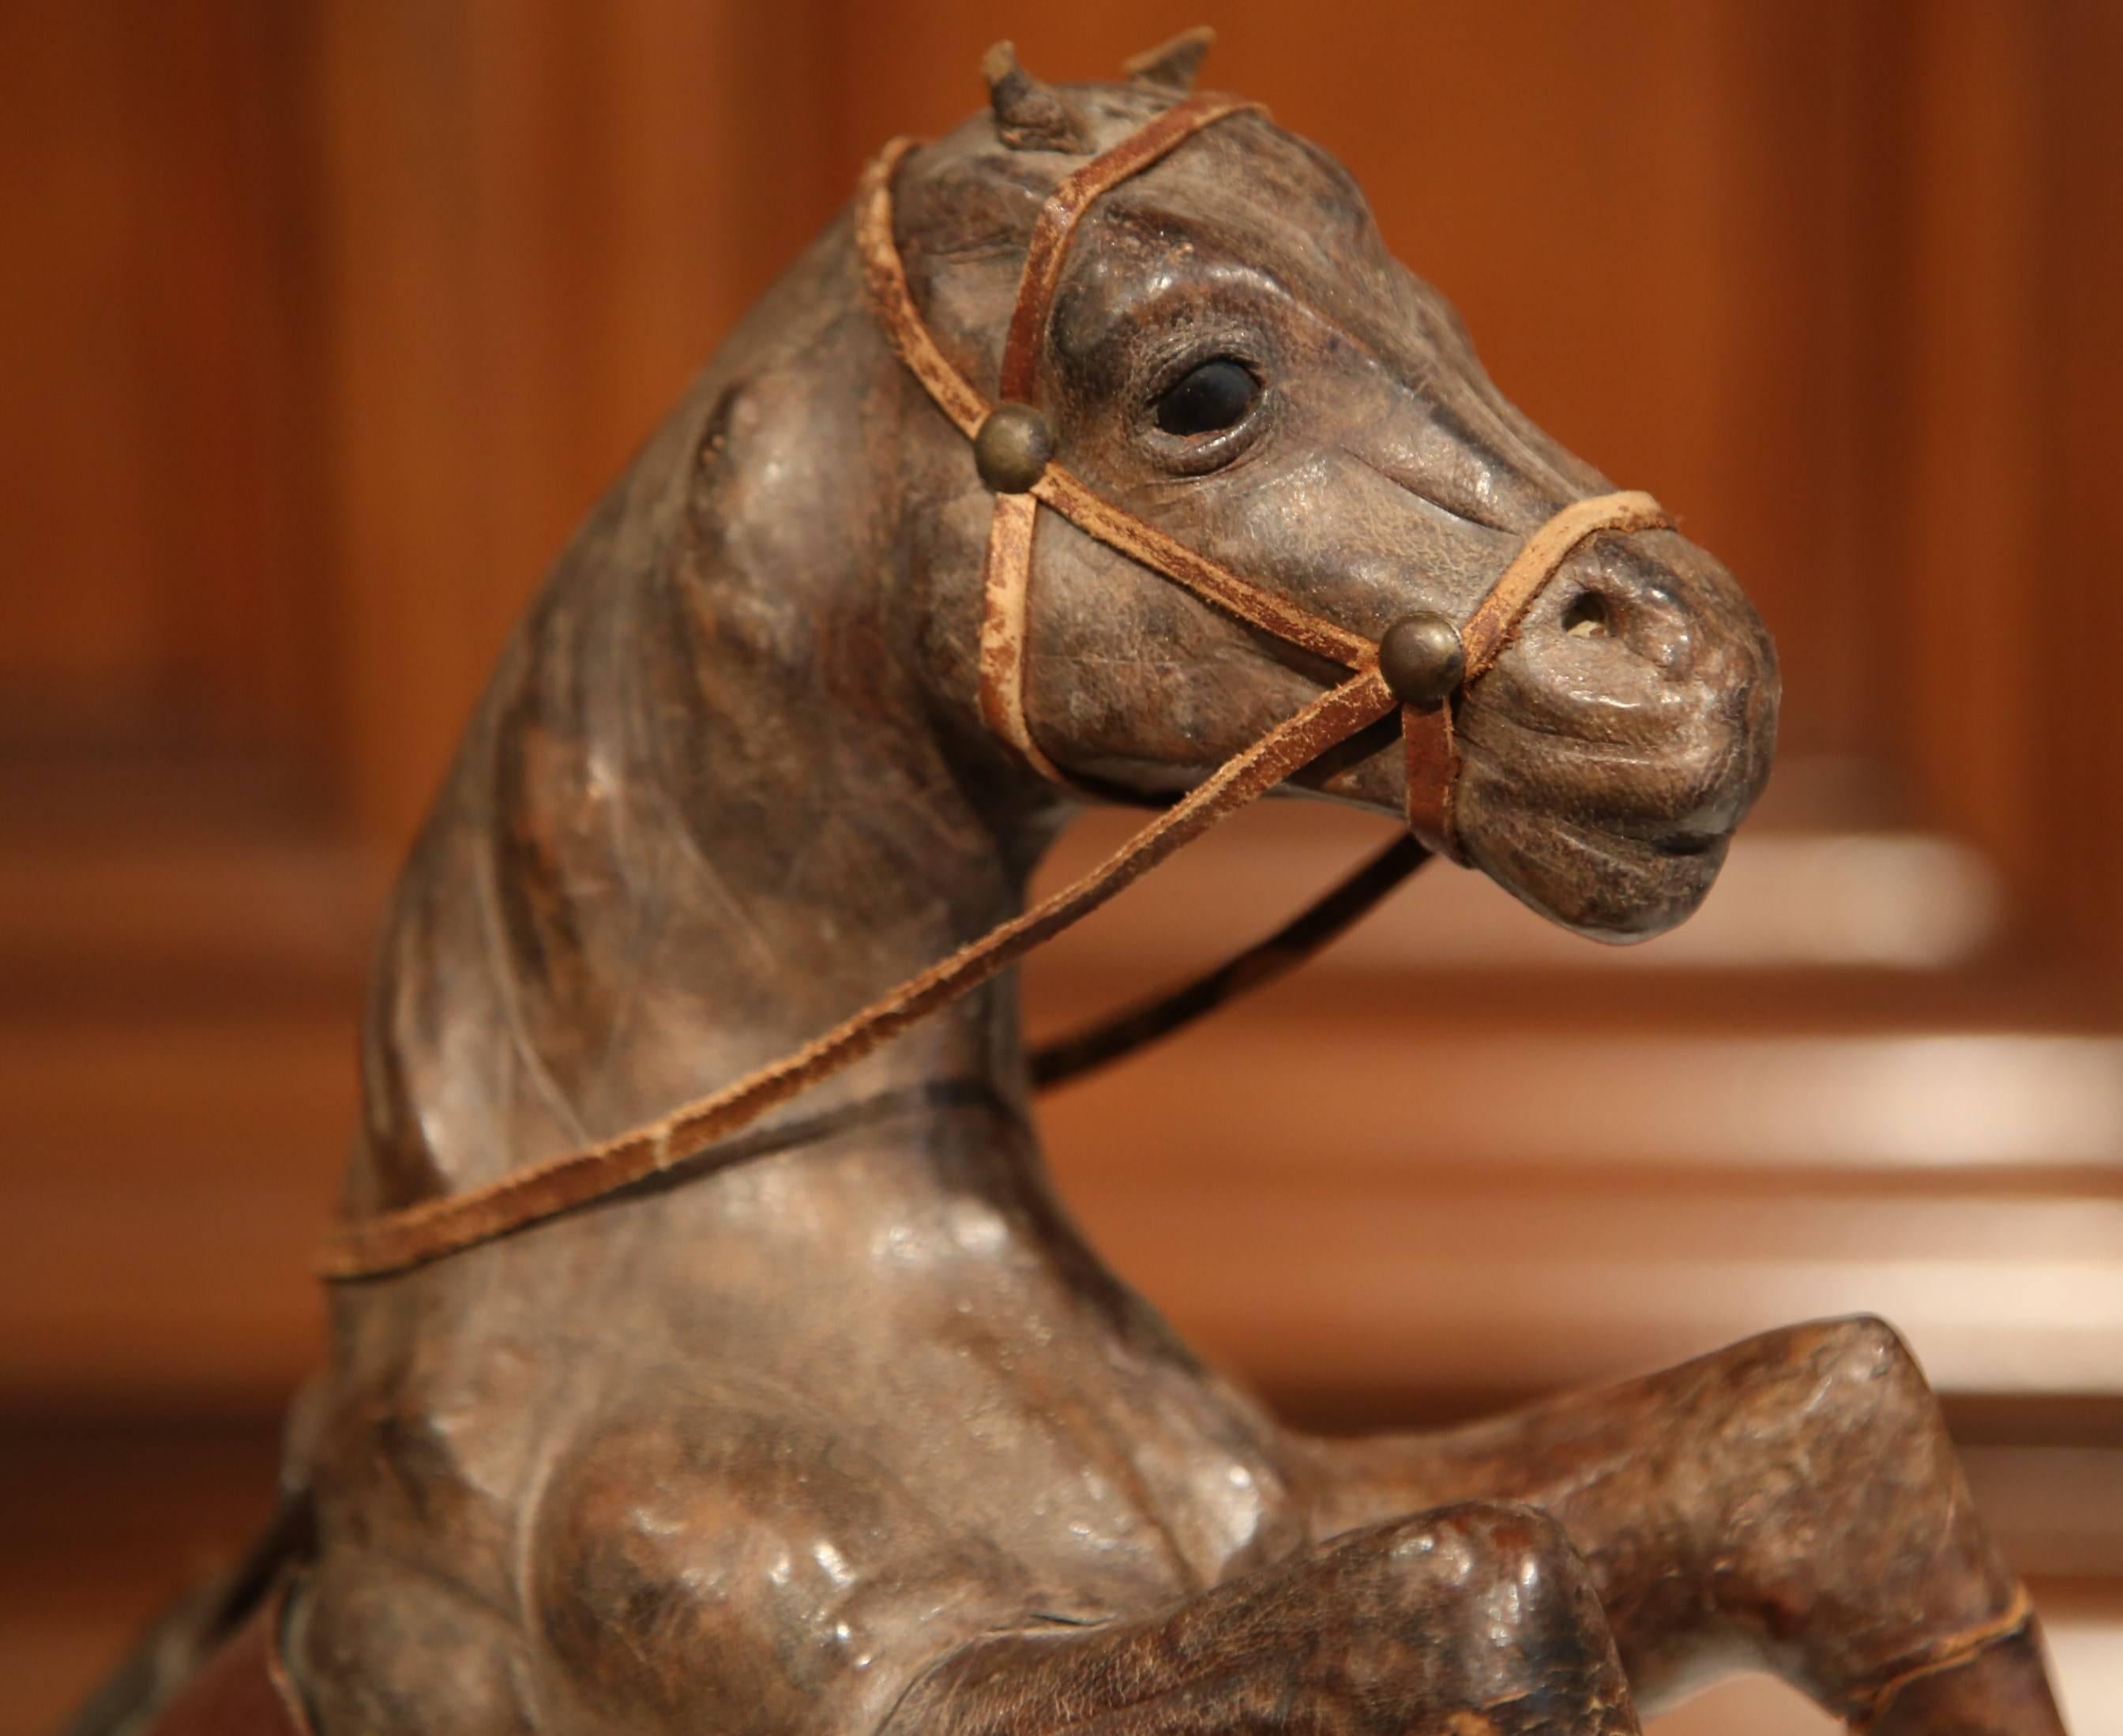 leather horse figurine